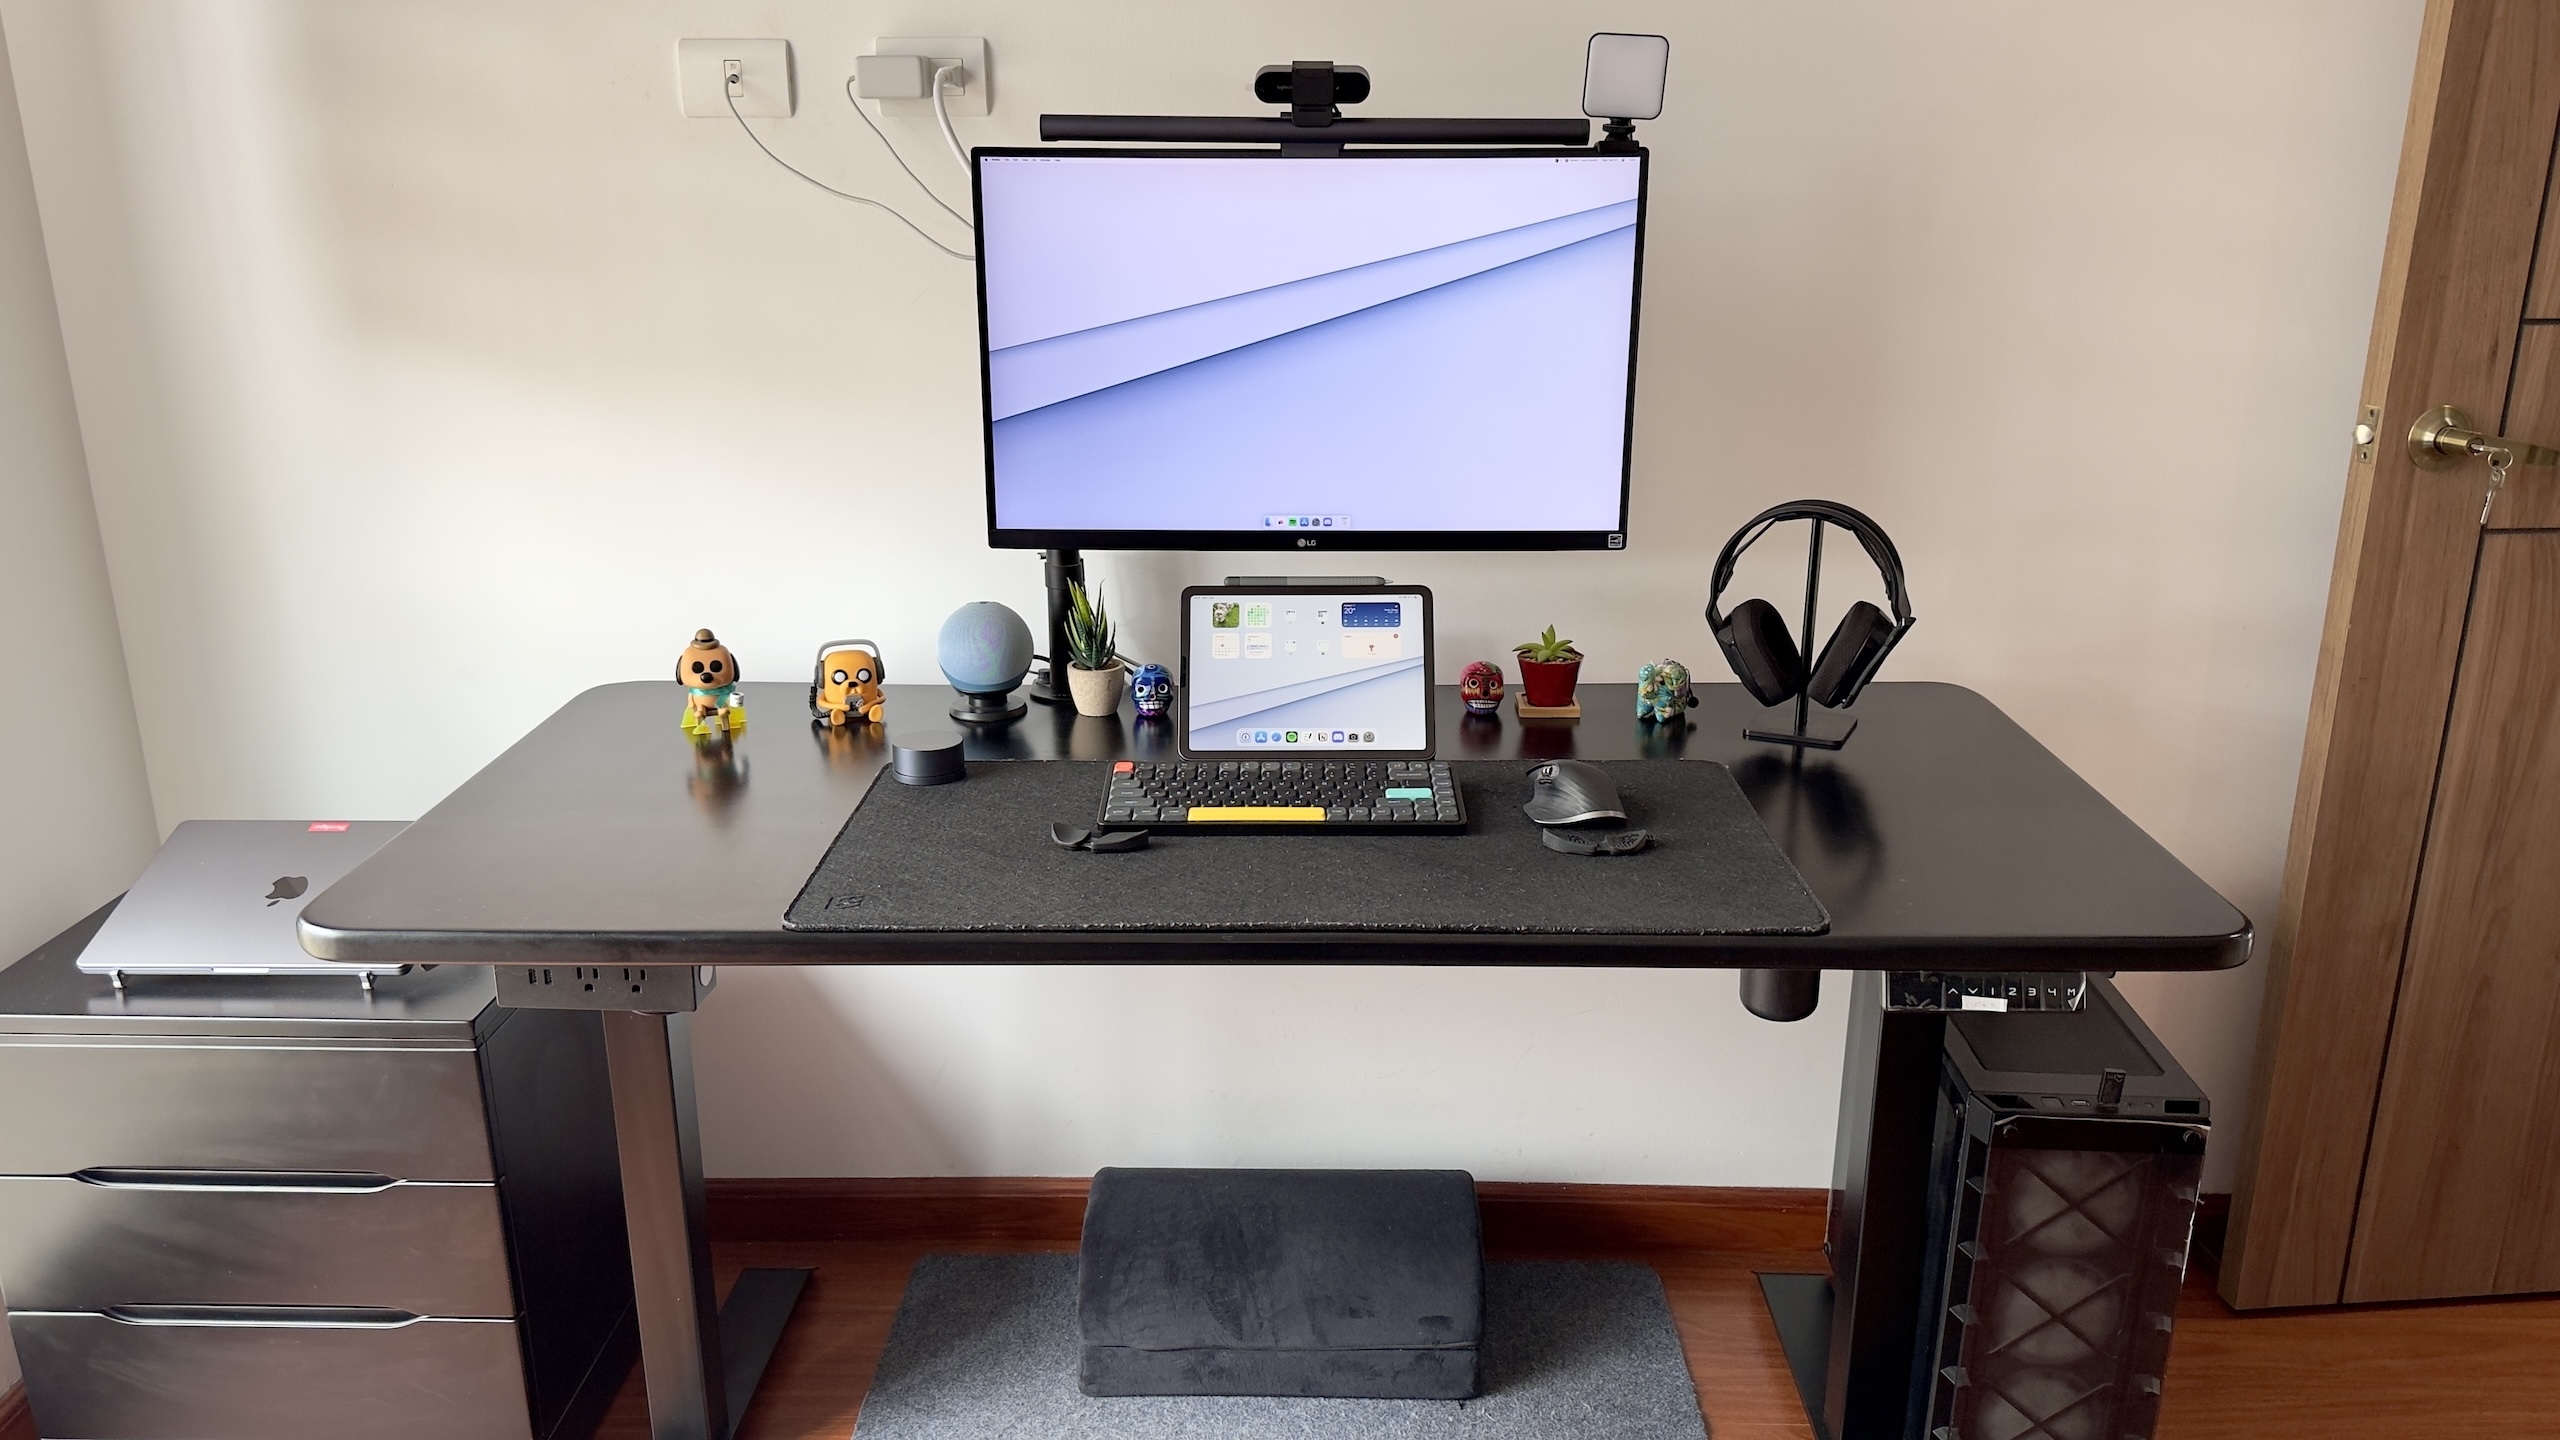 Romi's desk setup in early 2023